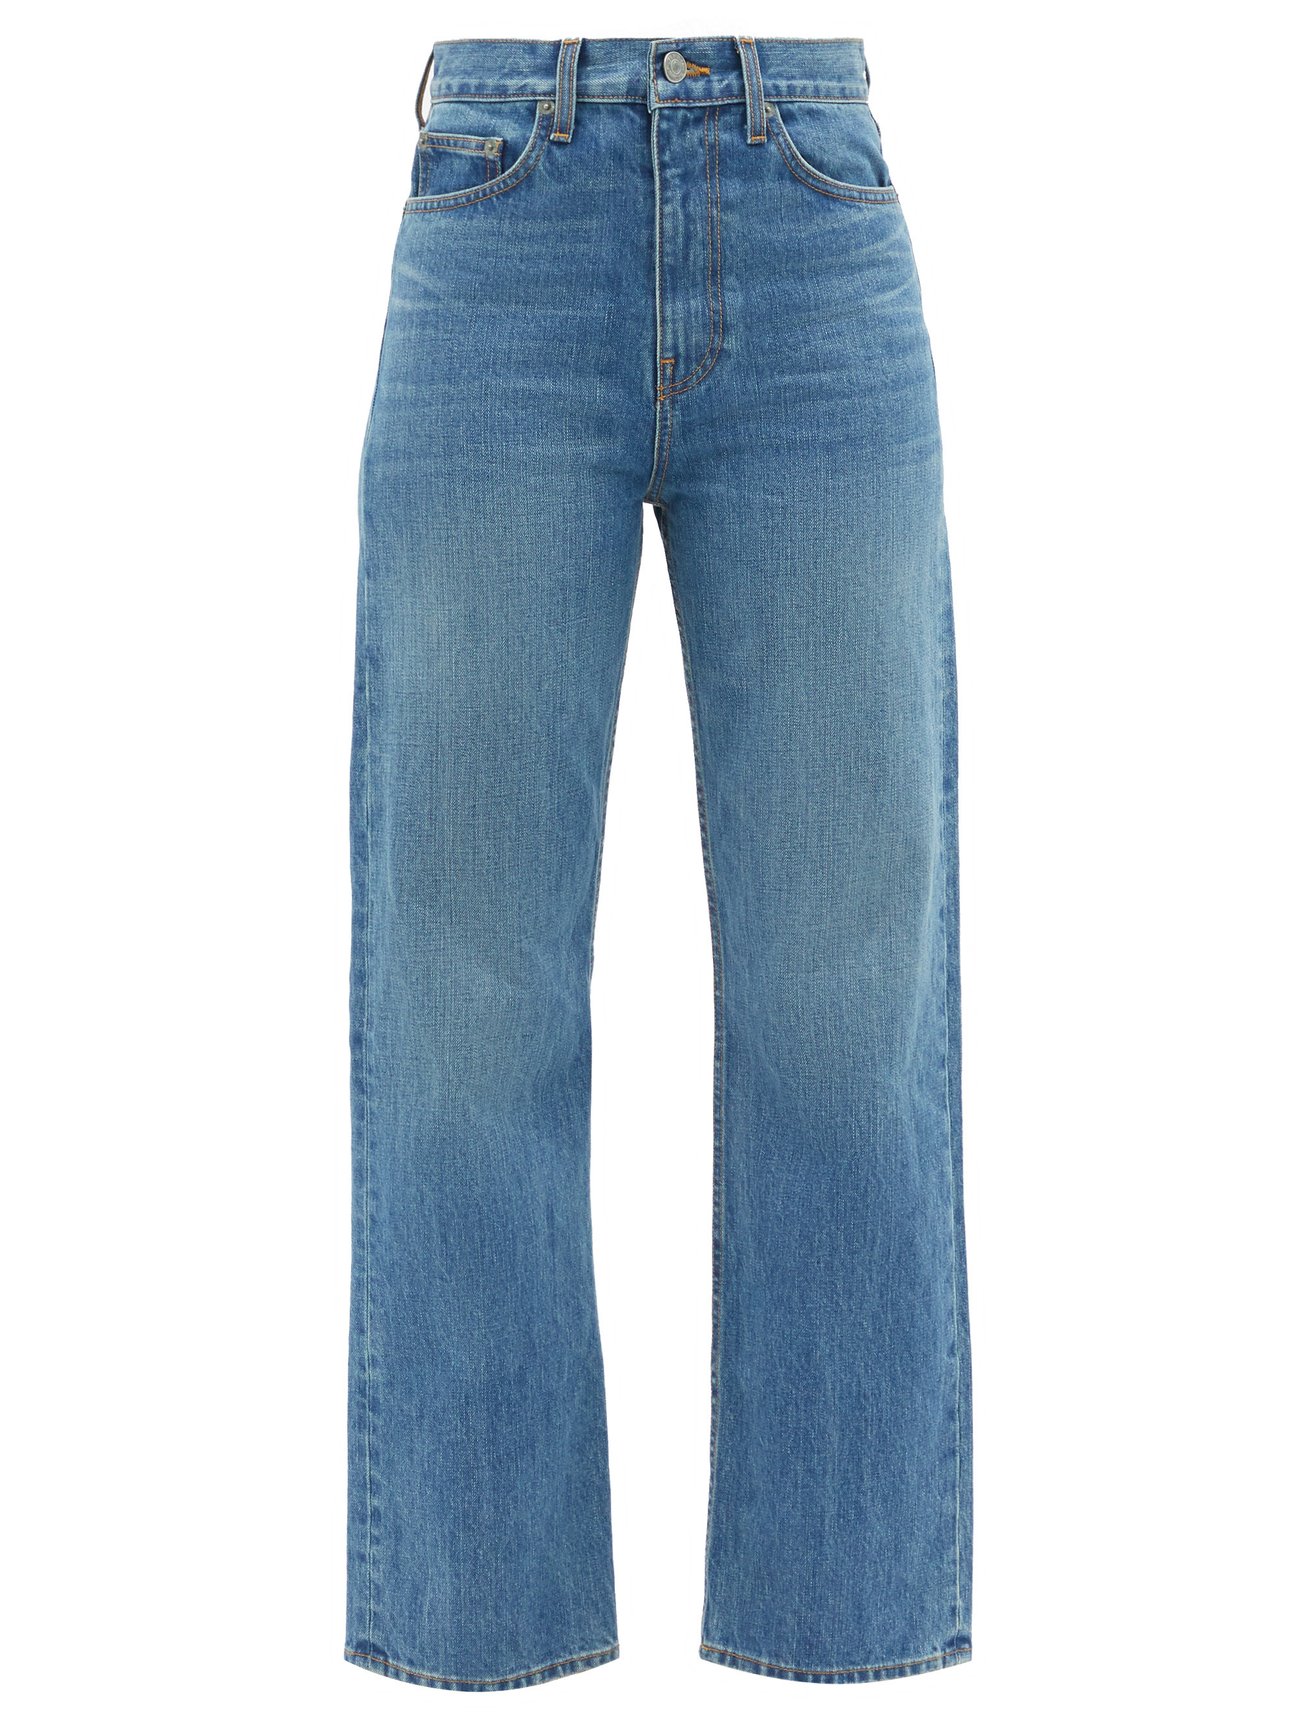 Blue Quark high-rise straight-leg jeans | Brock Collection ...